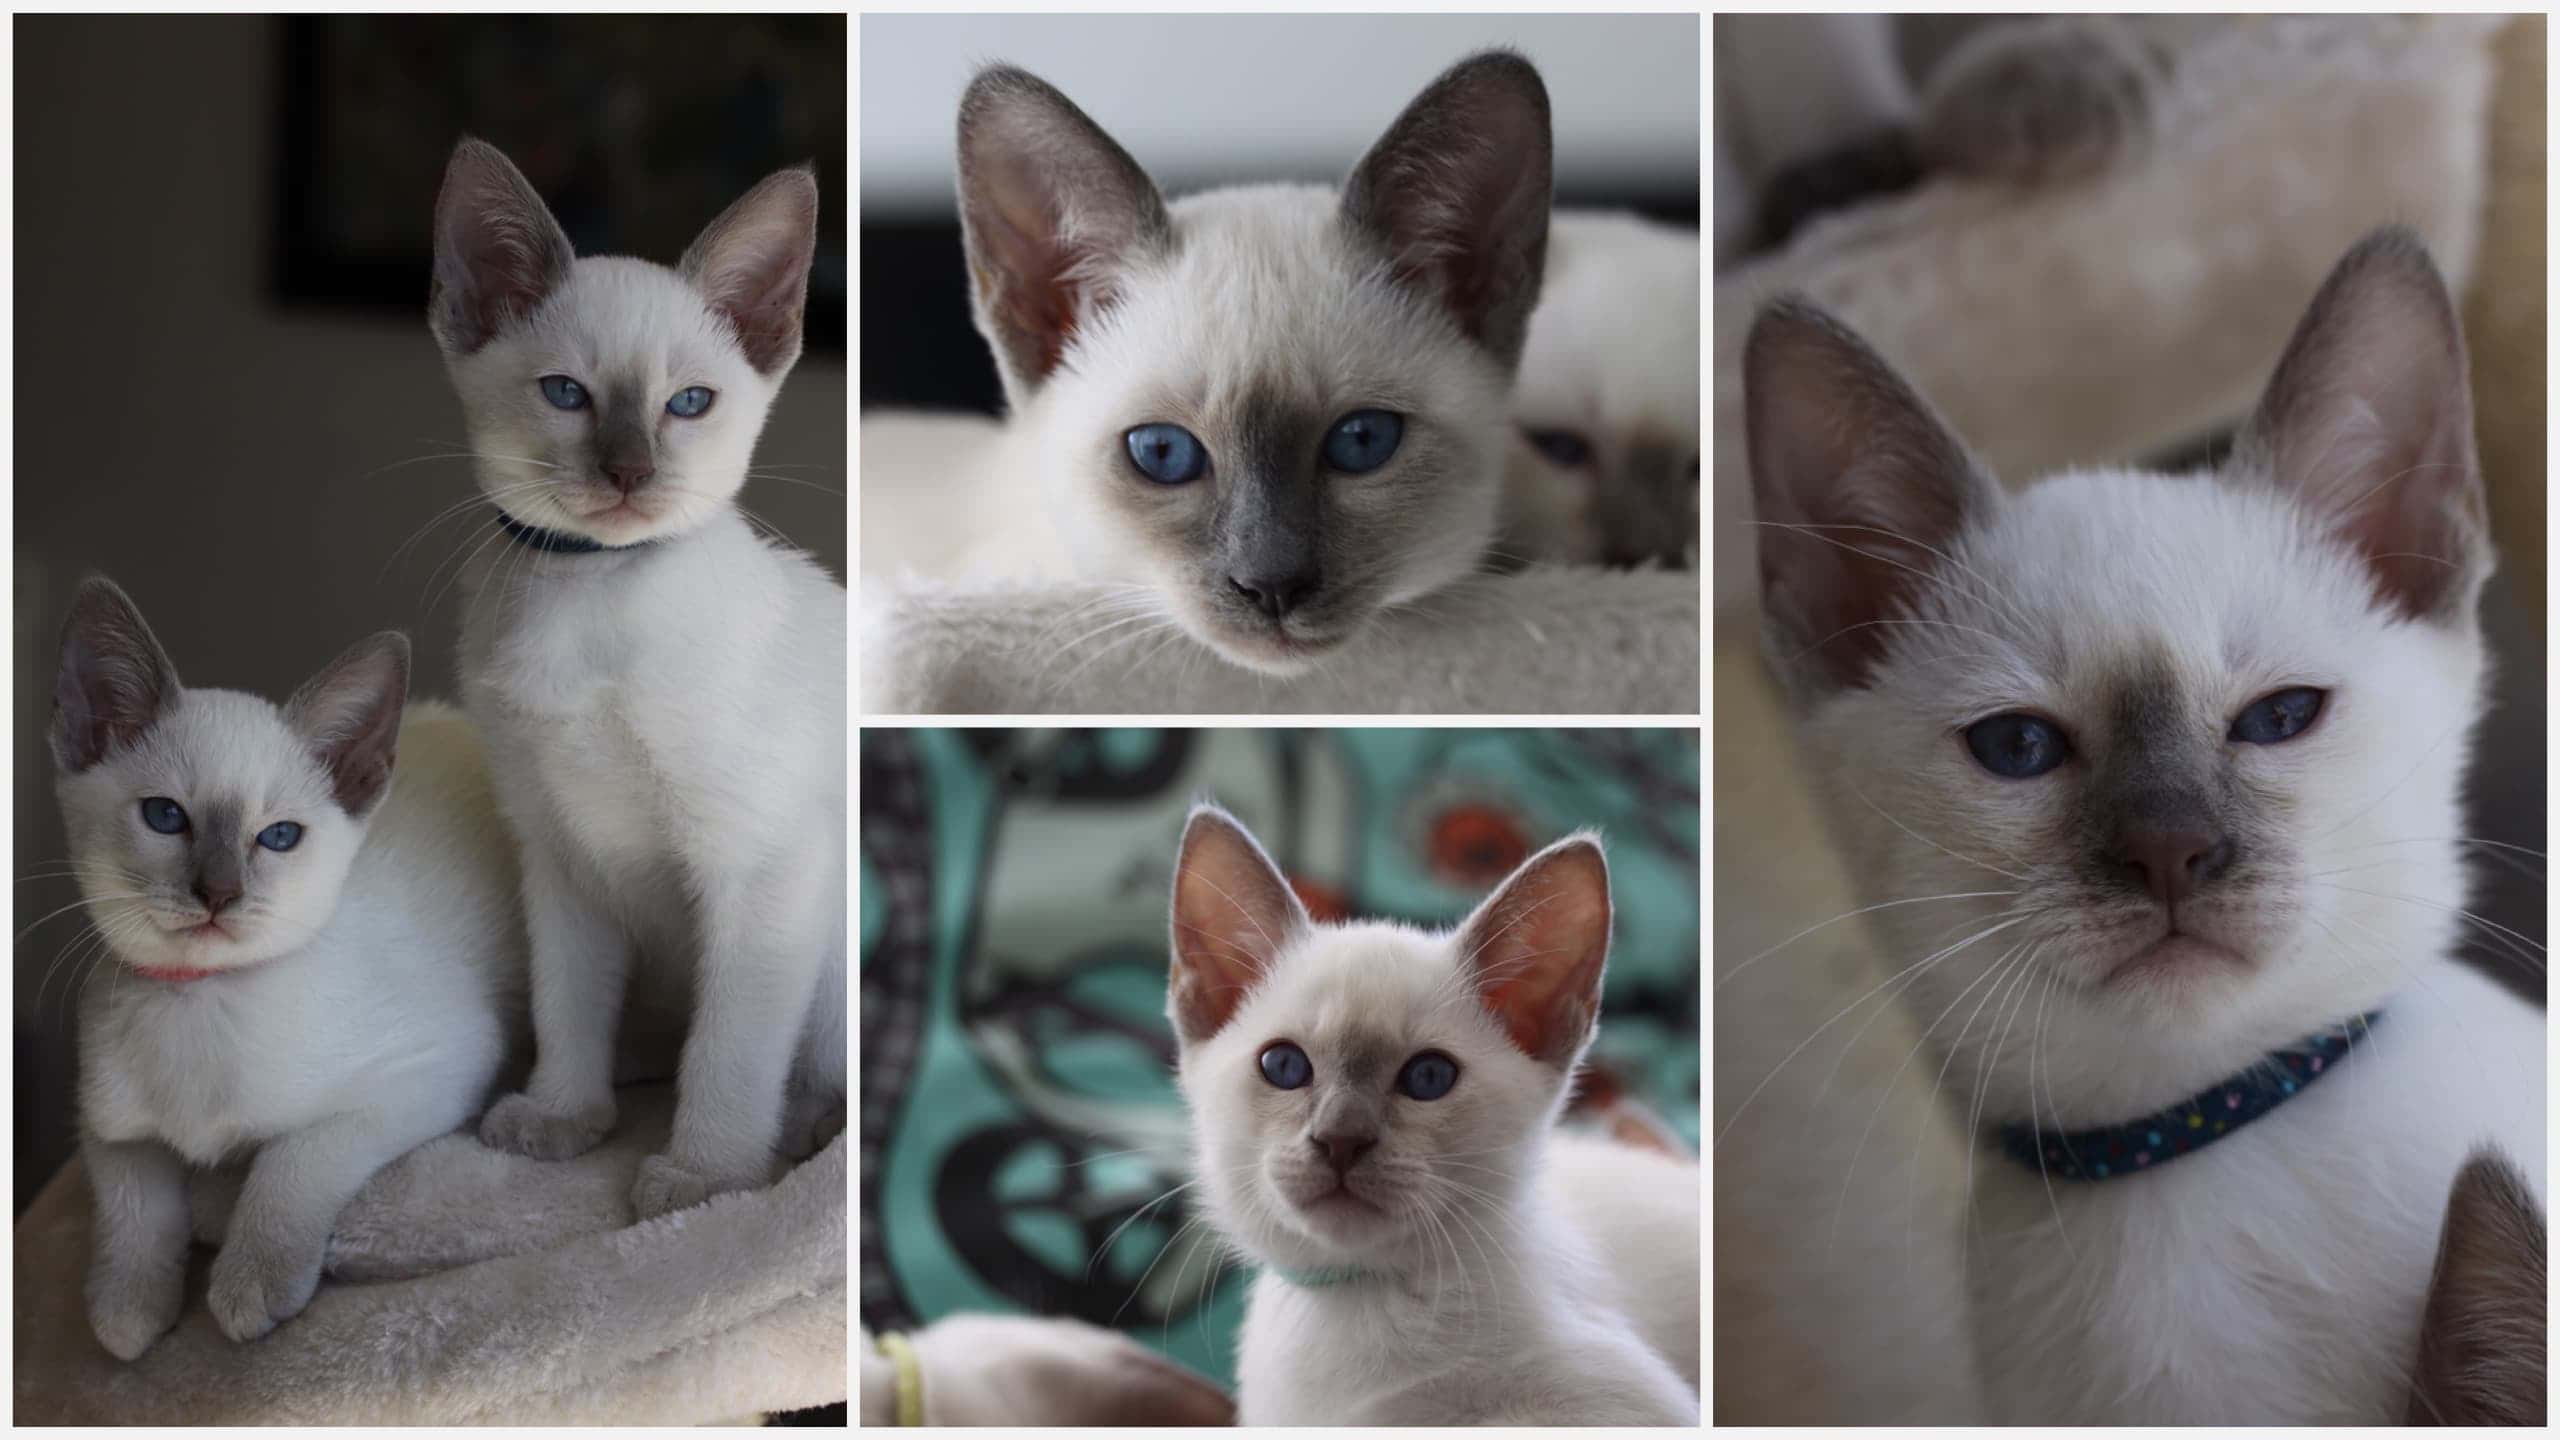 9 week old Old-style Siamese kittens